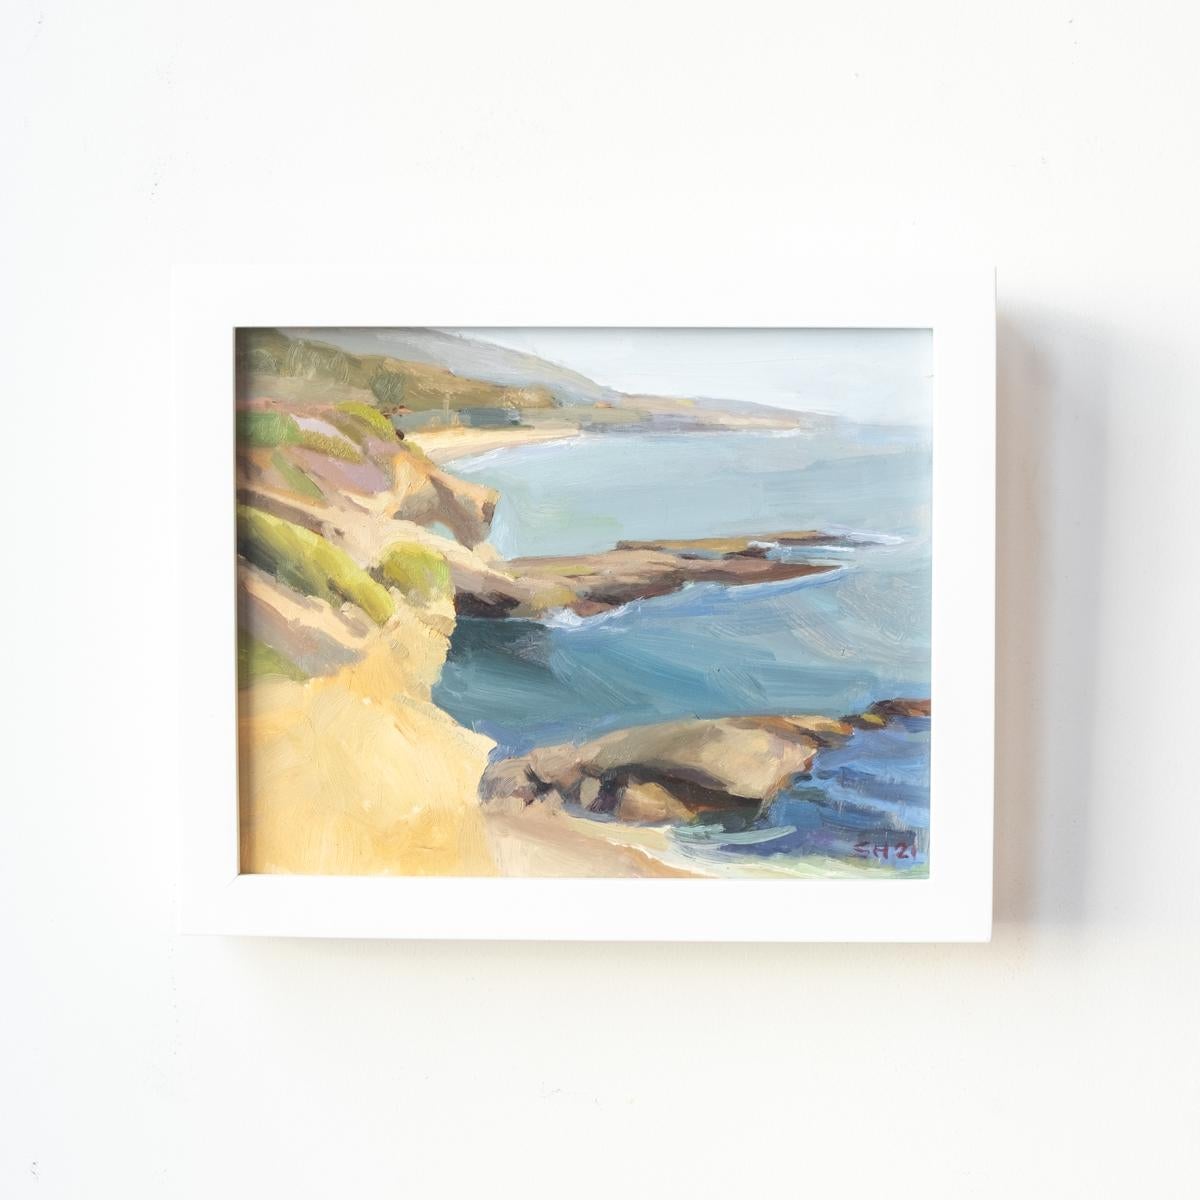 Sean Hnedak Landscape Painting - An Impressionist Oil Seascape Painting, "Keyhole Arch"